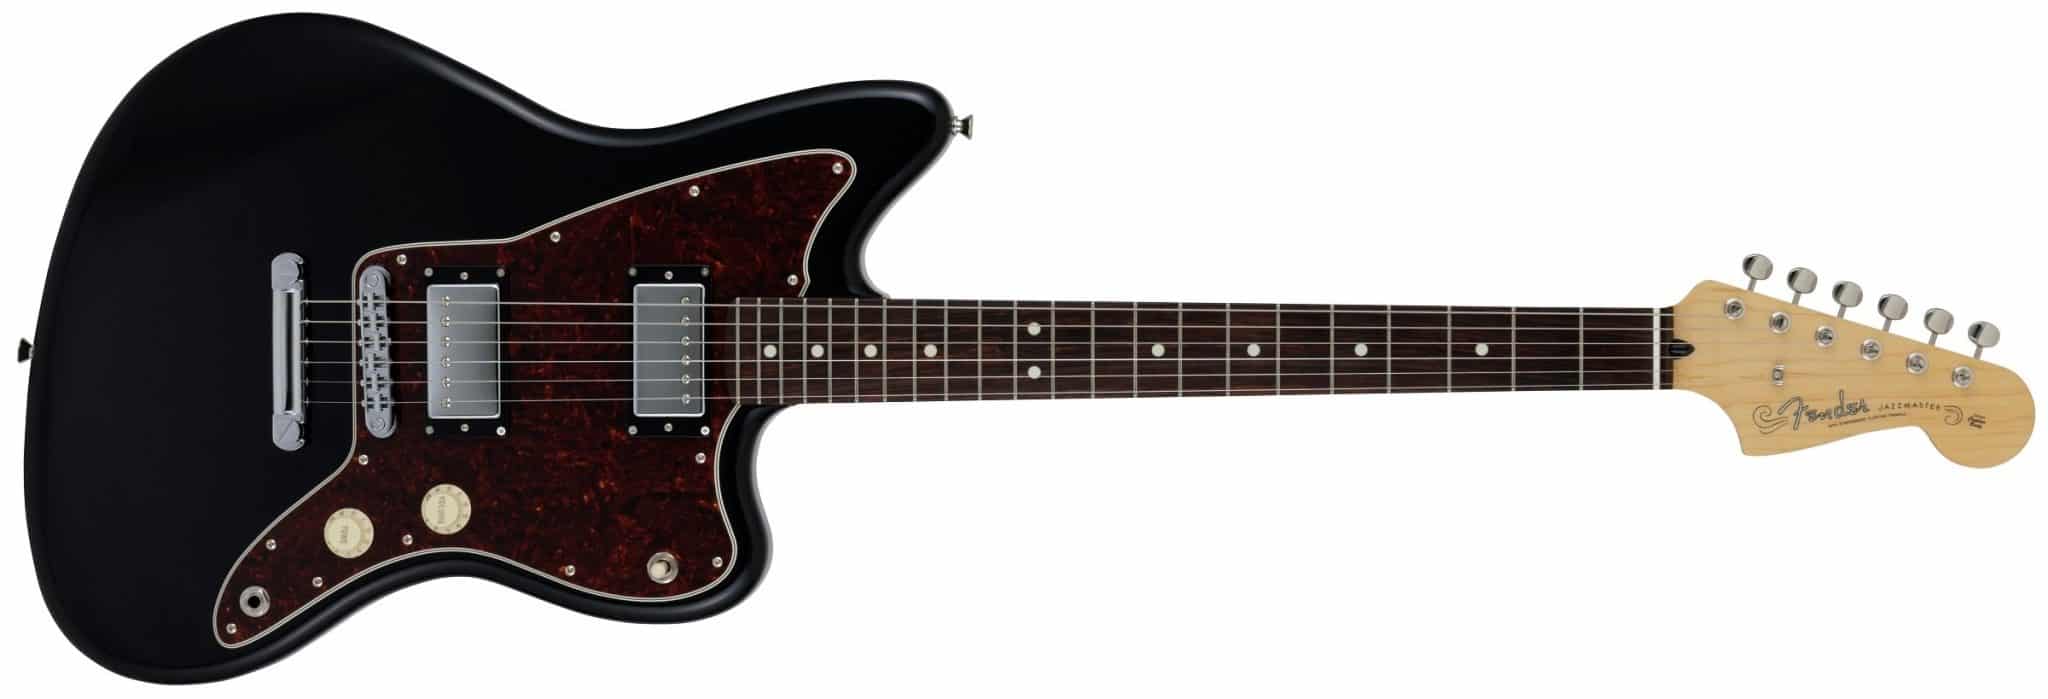 Fender Adjusto-Matic Jazzmaster HH in Black